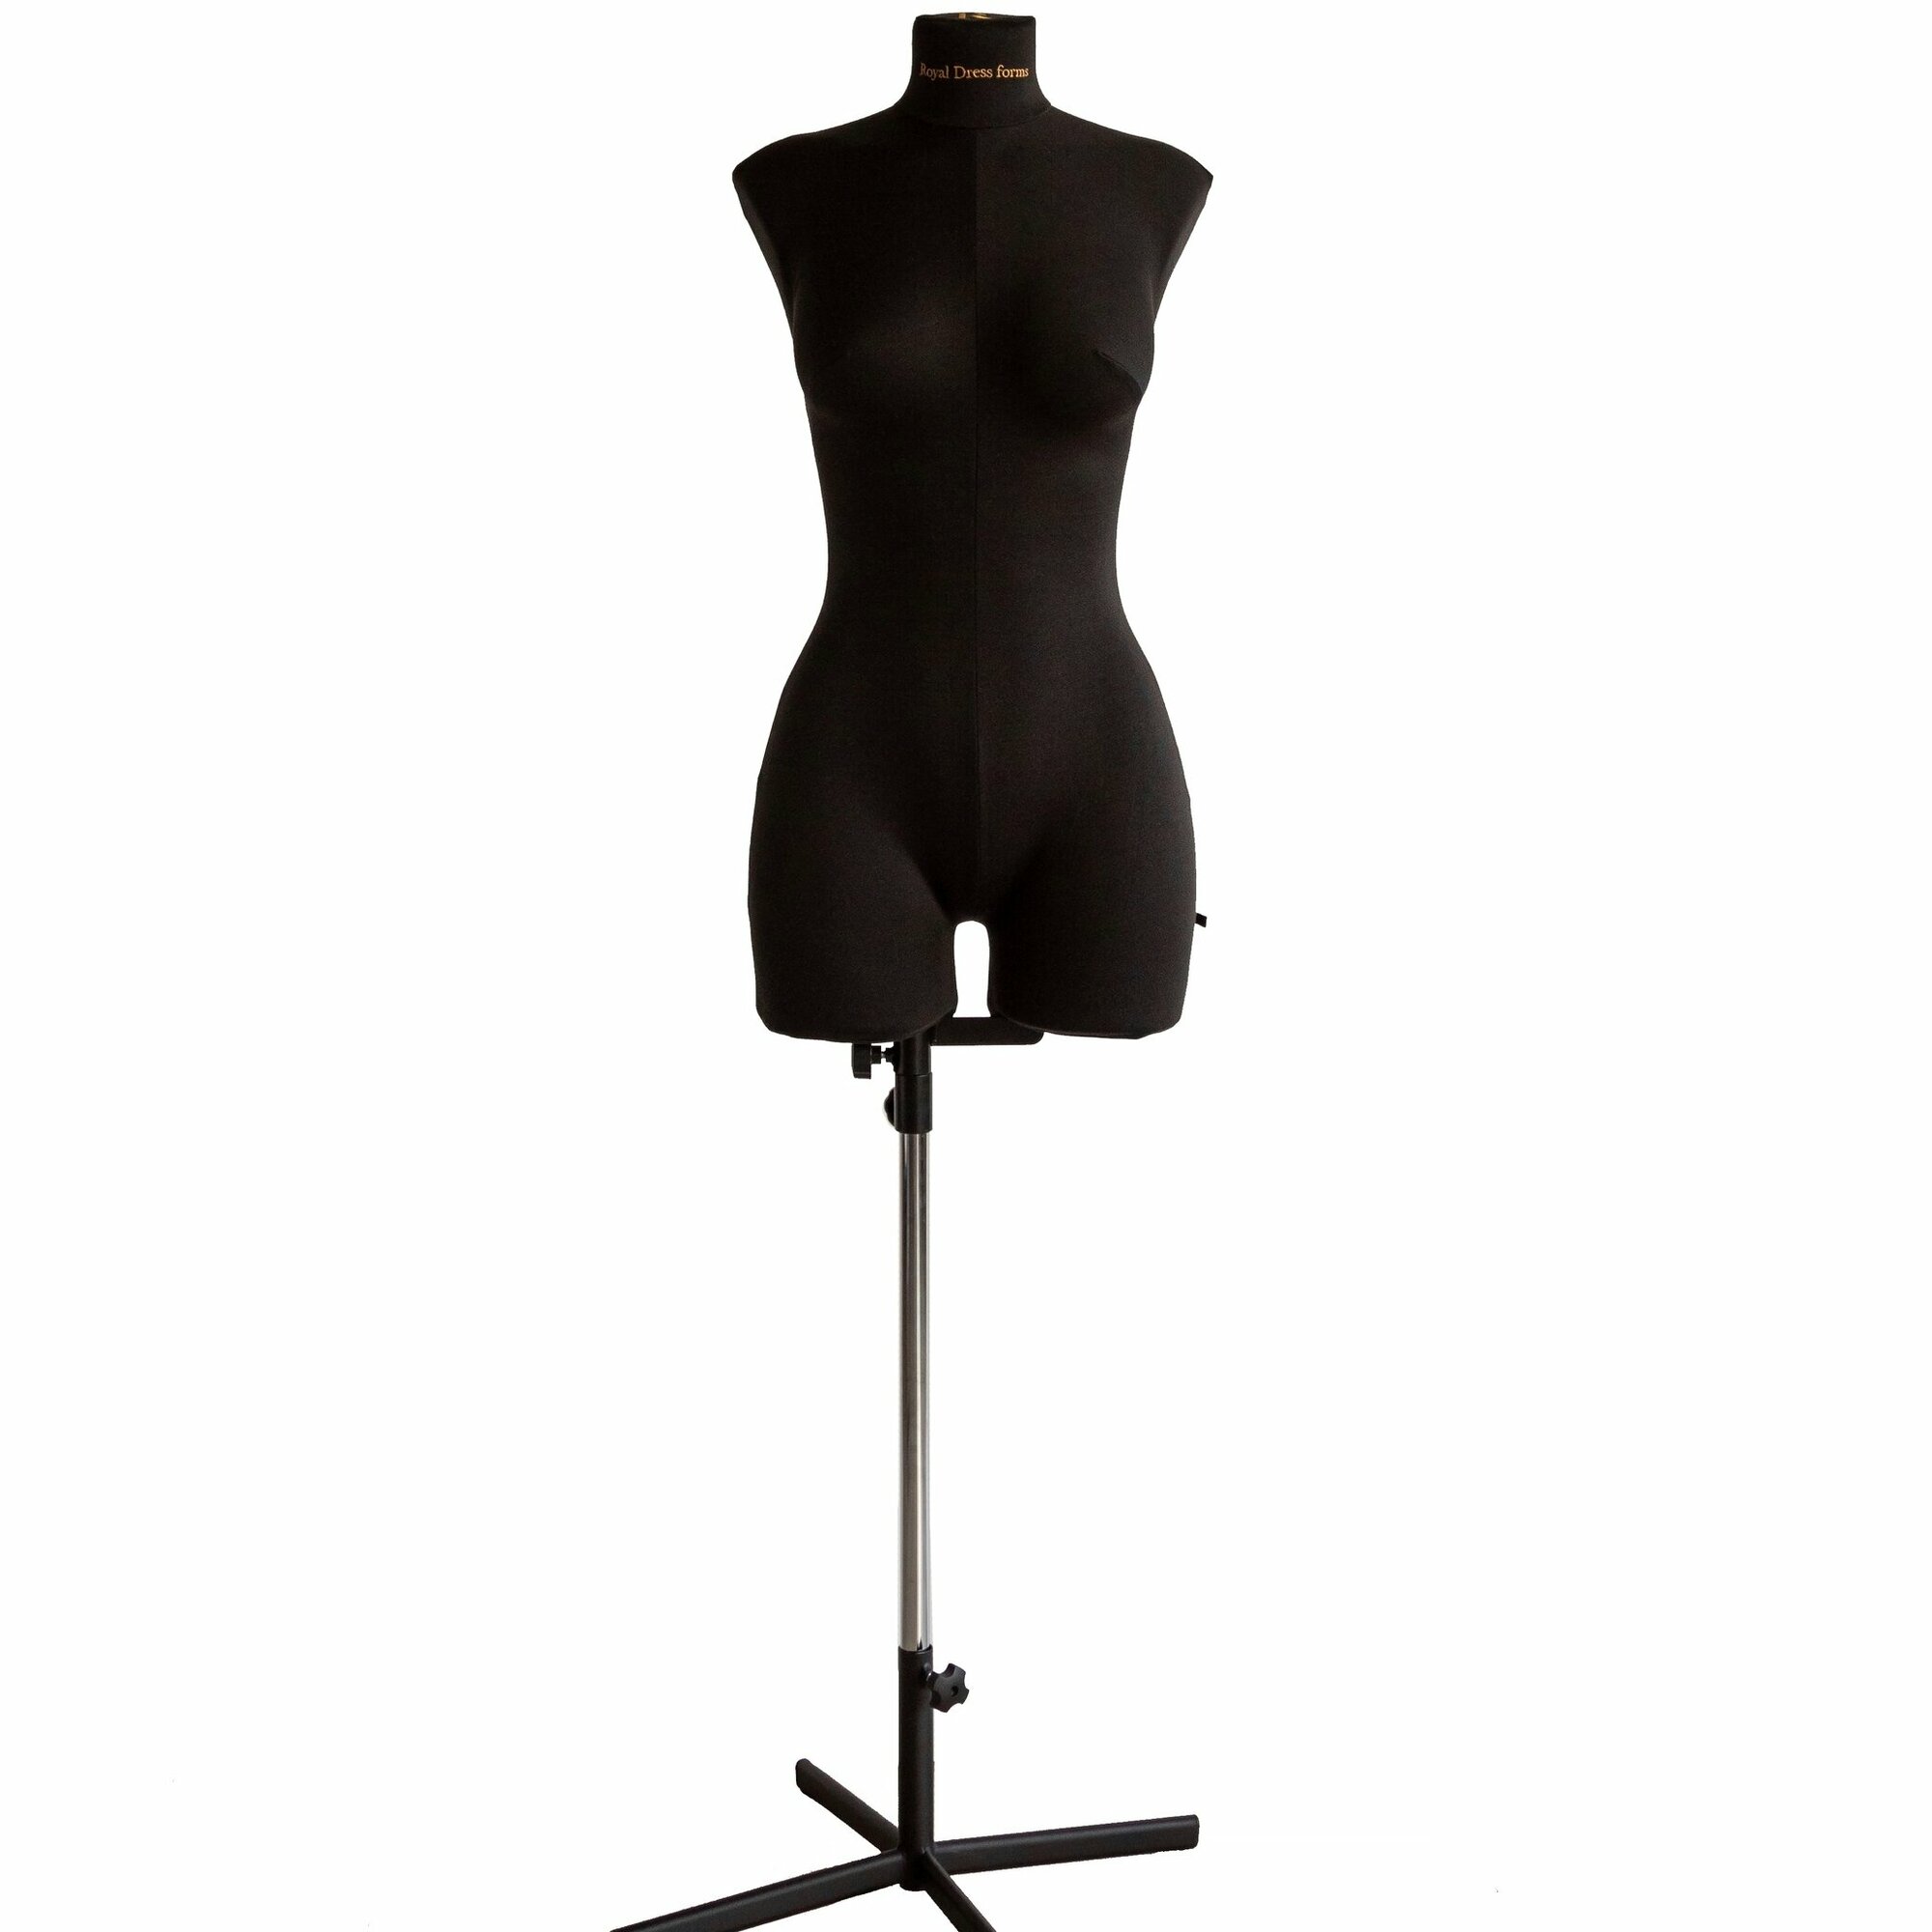 Бельевой манекен Пенелопа Стандарт, Royal Dress forms размер XS/158